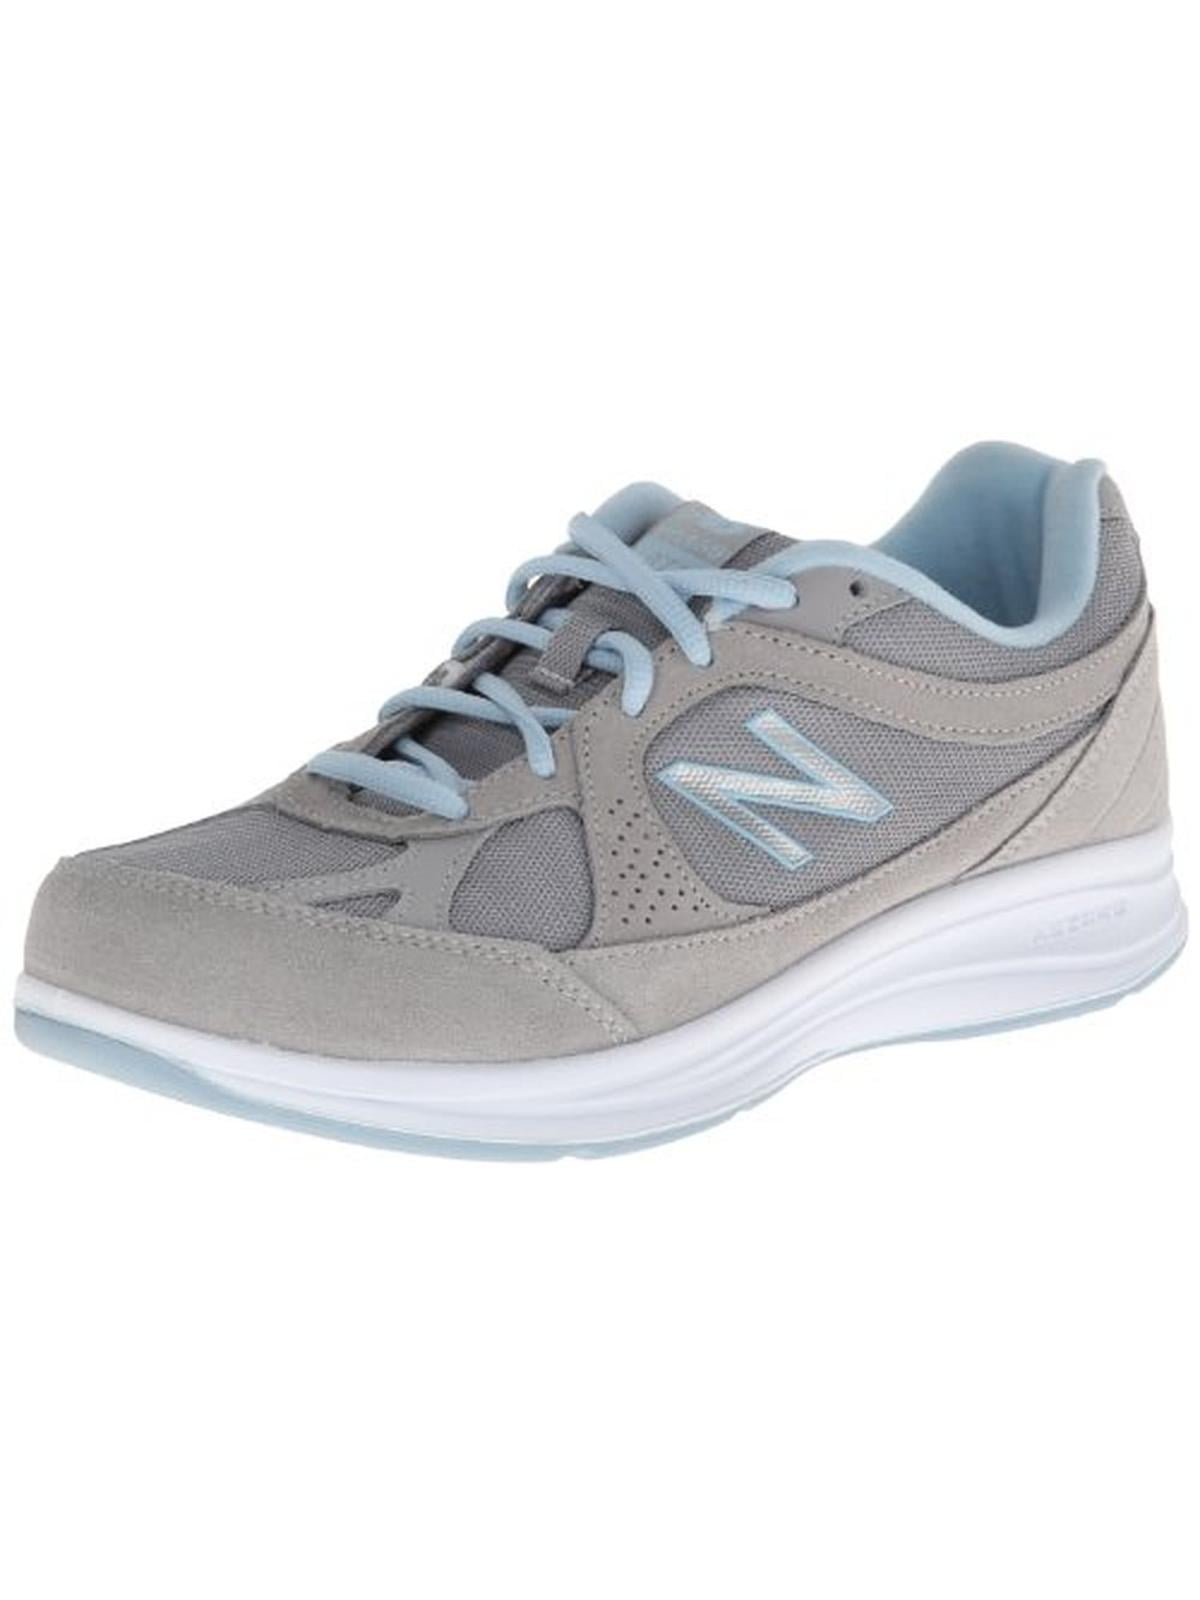 New Balance Womens 877 Mesh Comfort Walking Shoes - Walmart.com